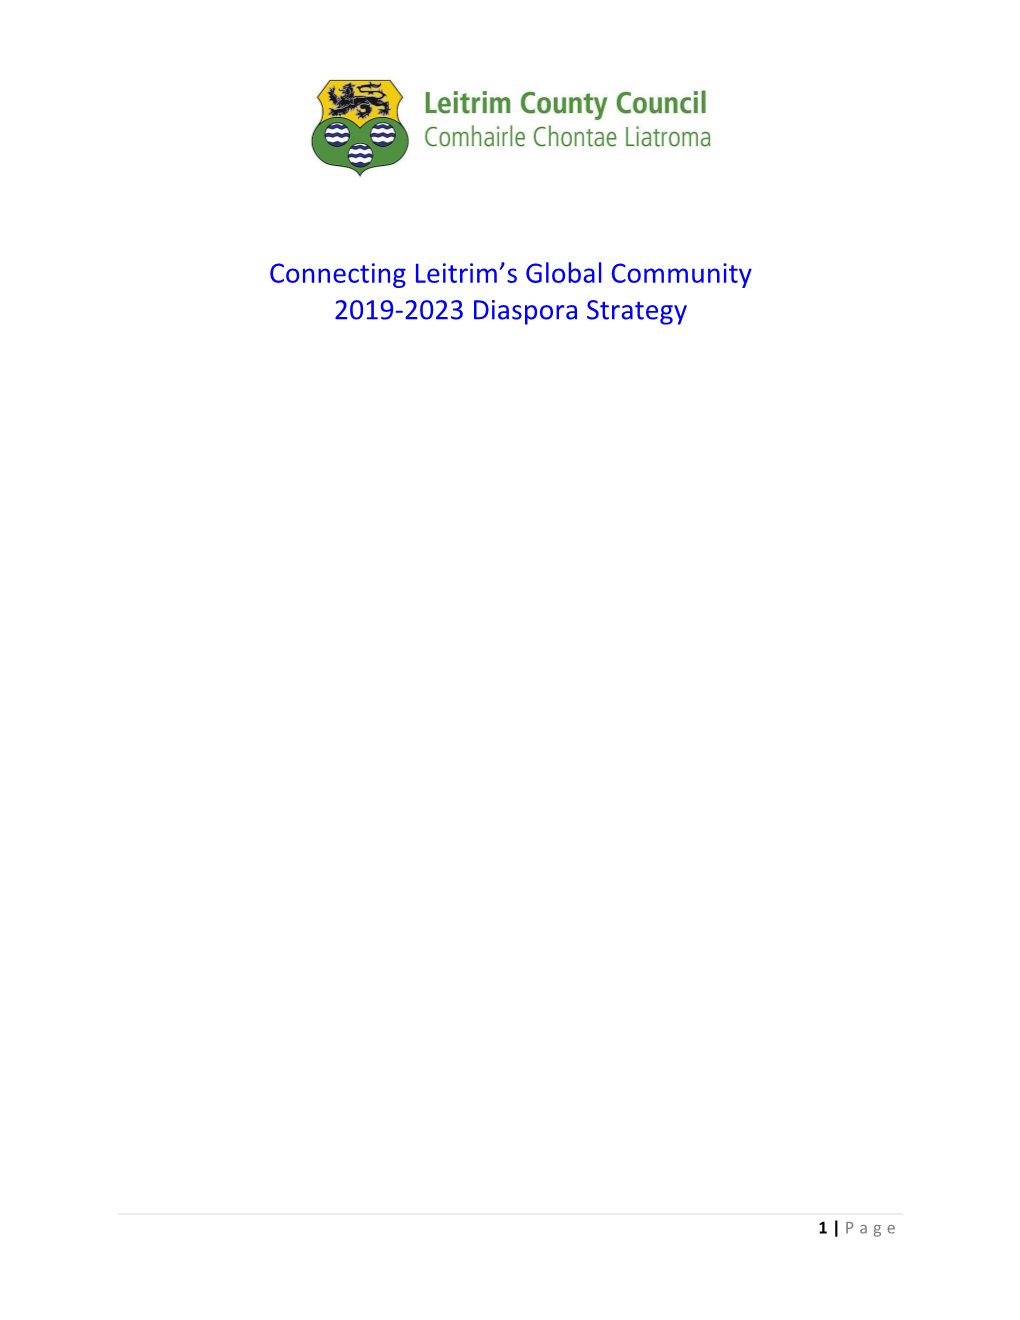 Connecting Leitrim's Global Community 2019-2023 Diaspora Strategy